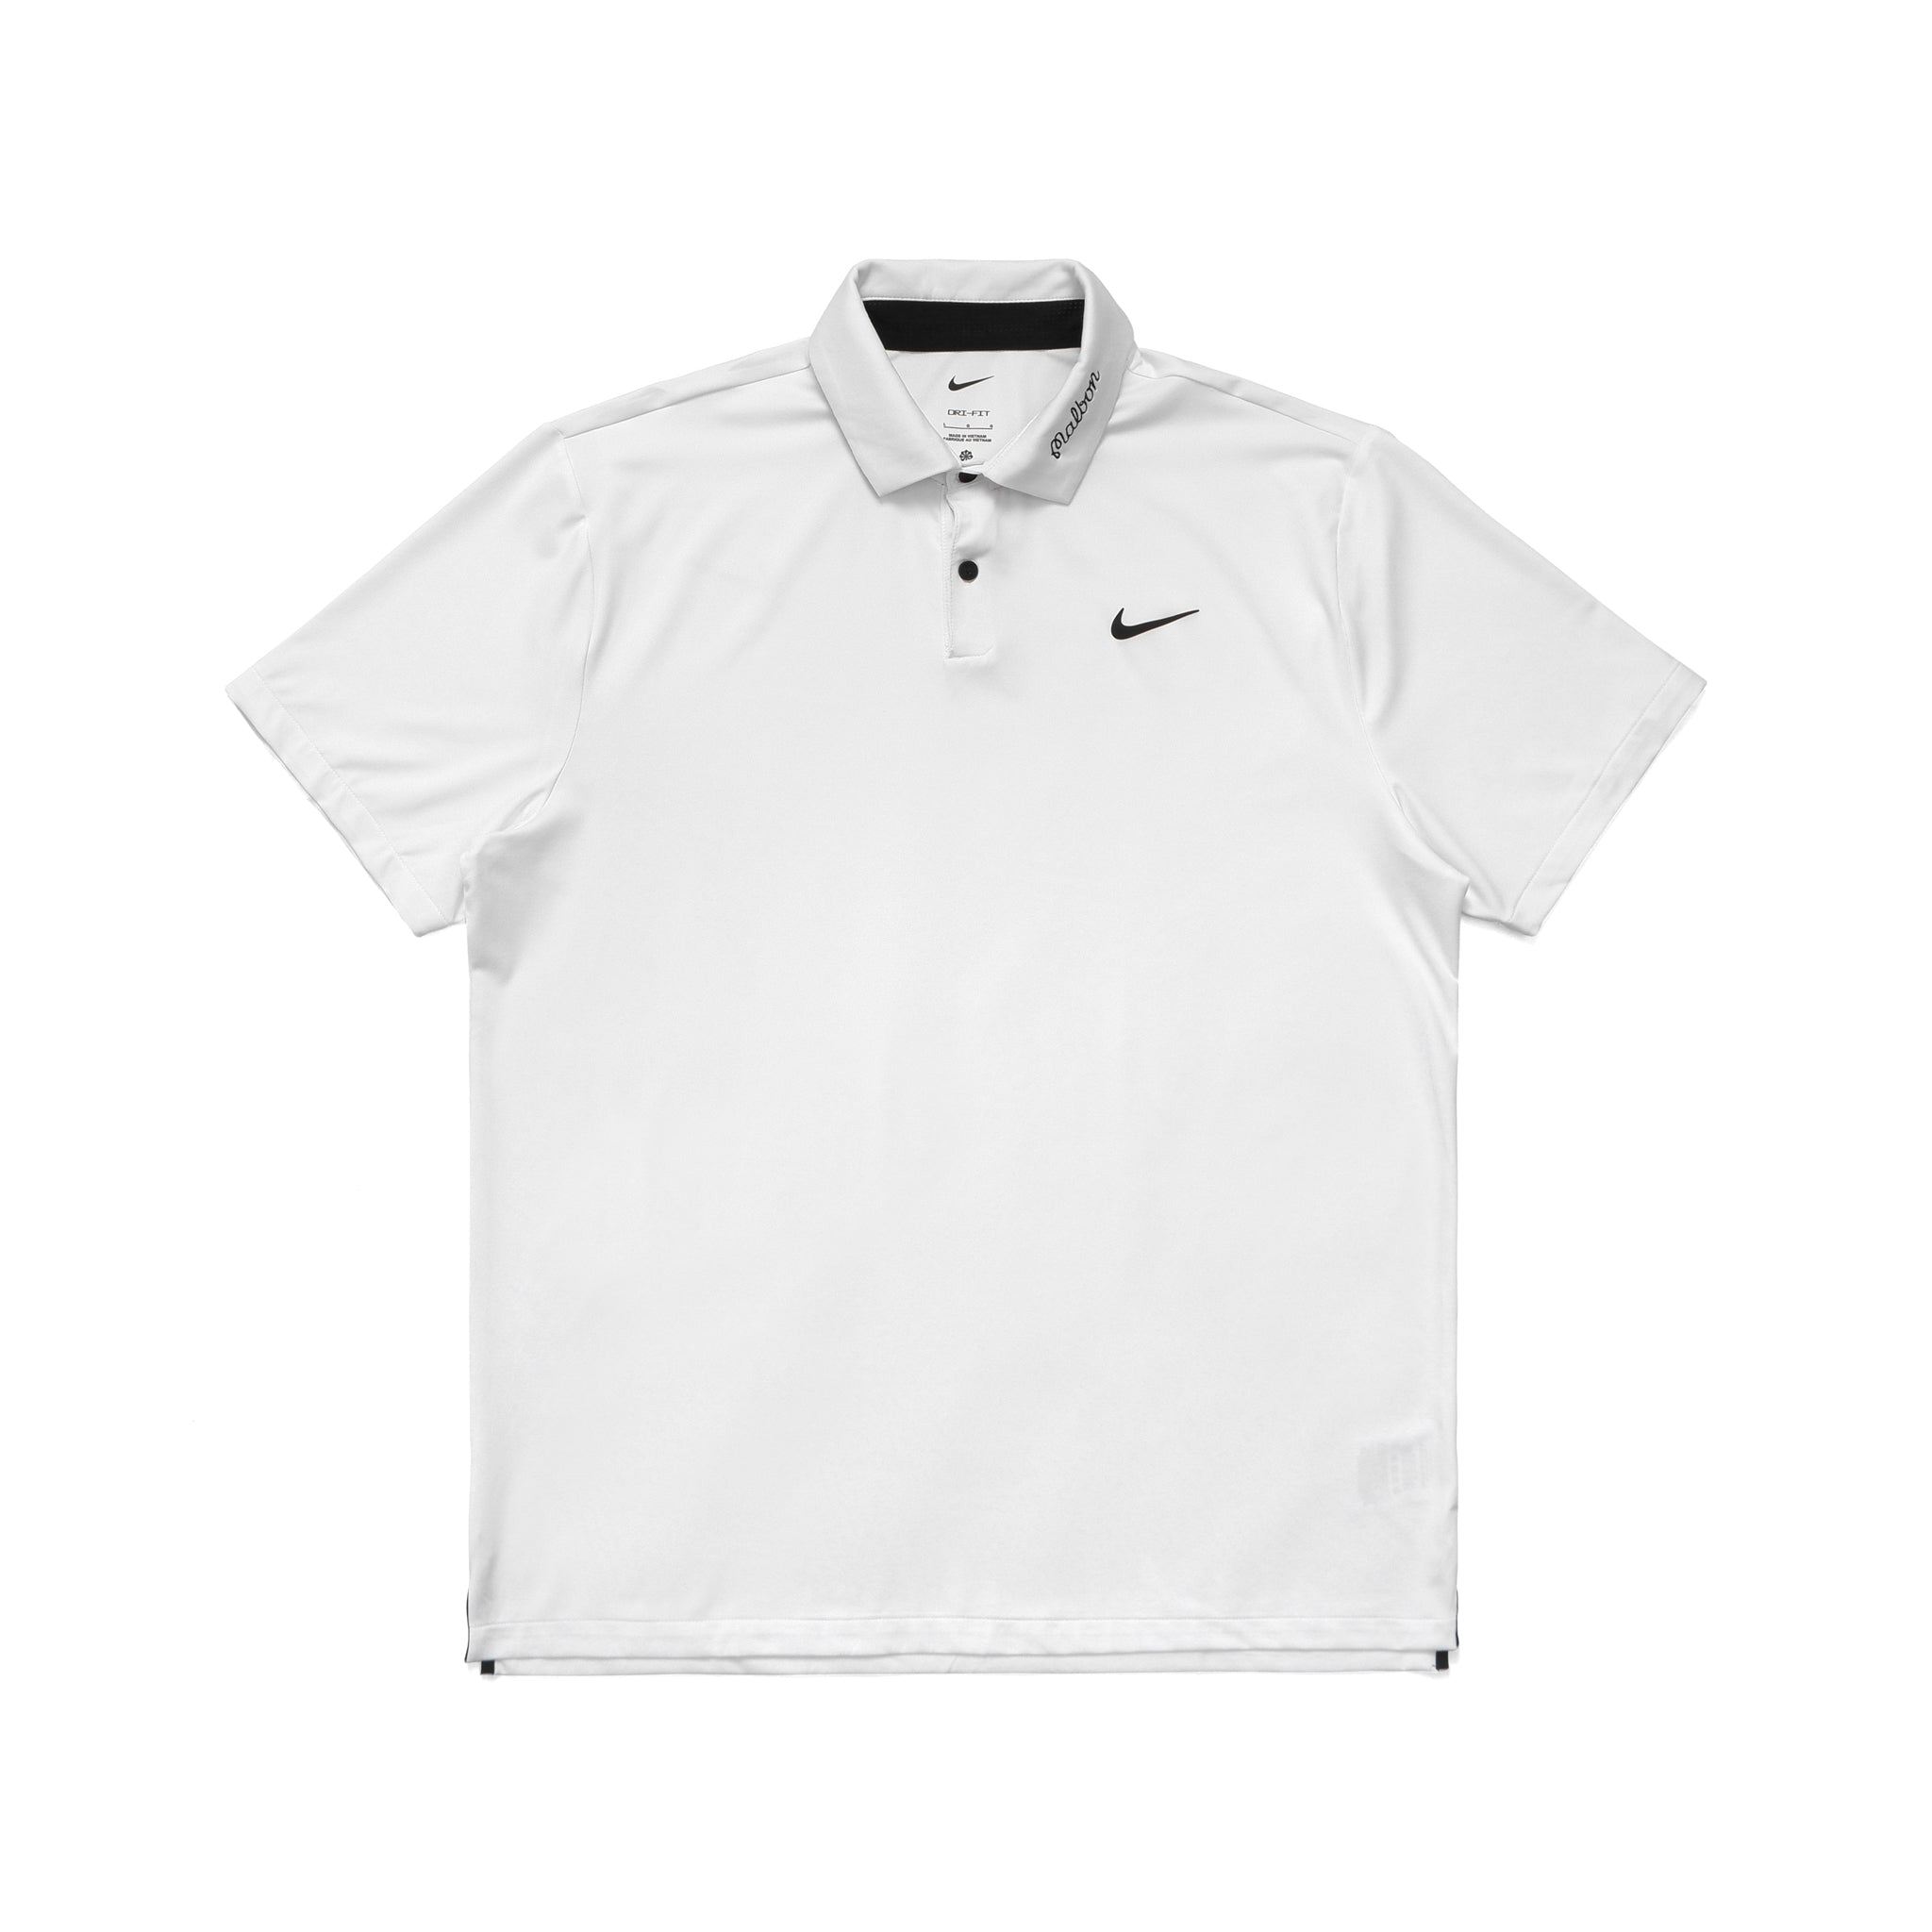 Malbon x Nike Dri-FIT Tour Solid Polo – Malbon Golf